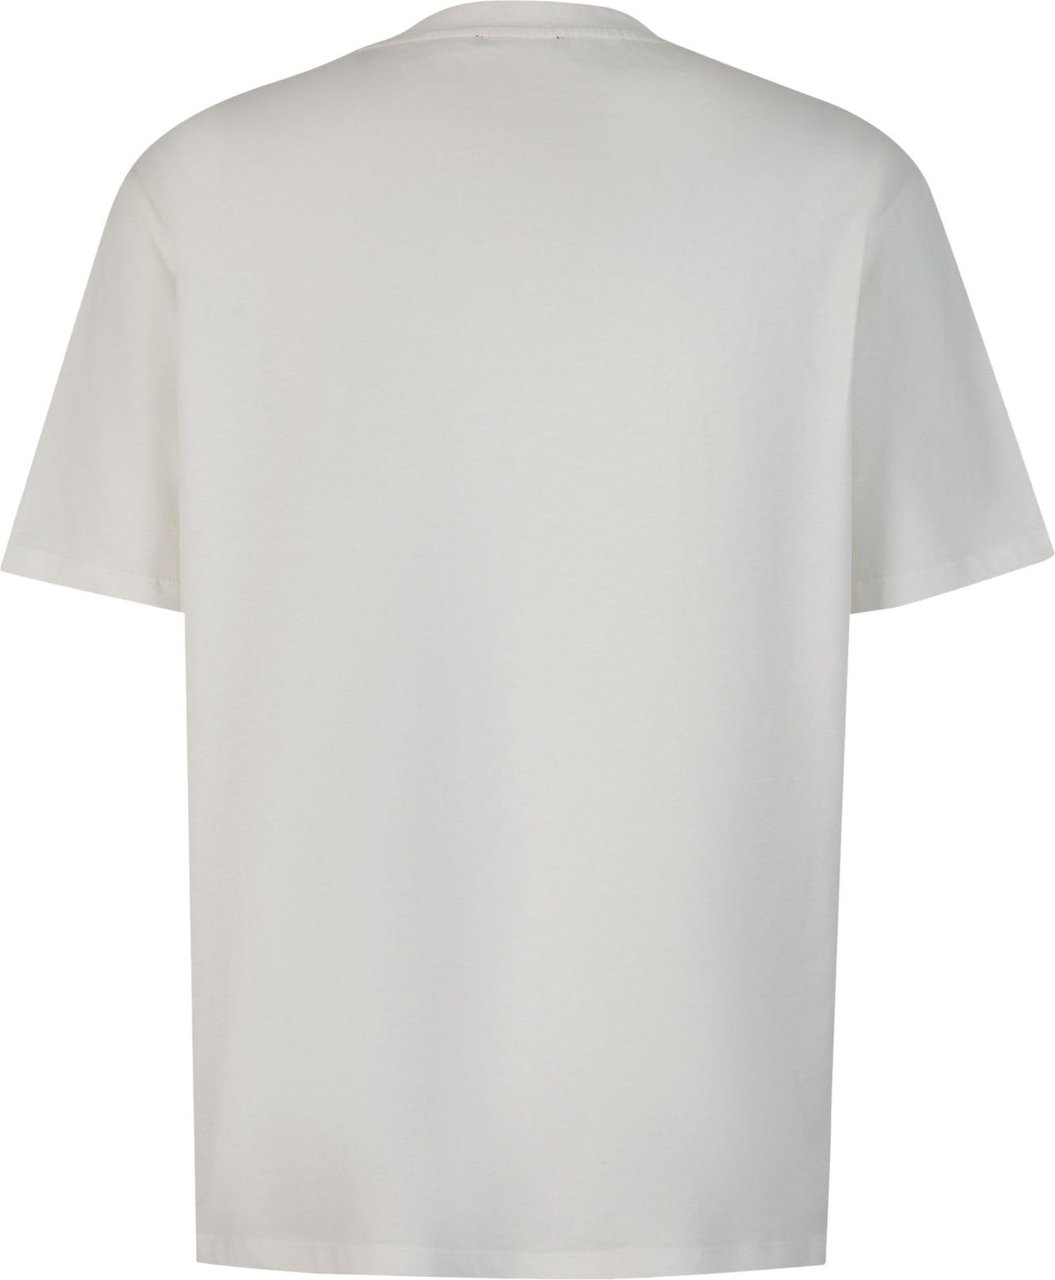 Balmain Cotton Printed T-Shirt Wit